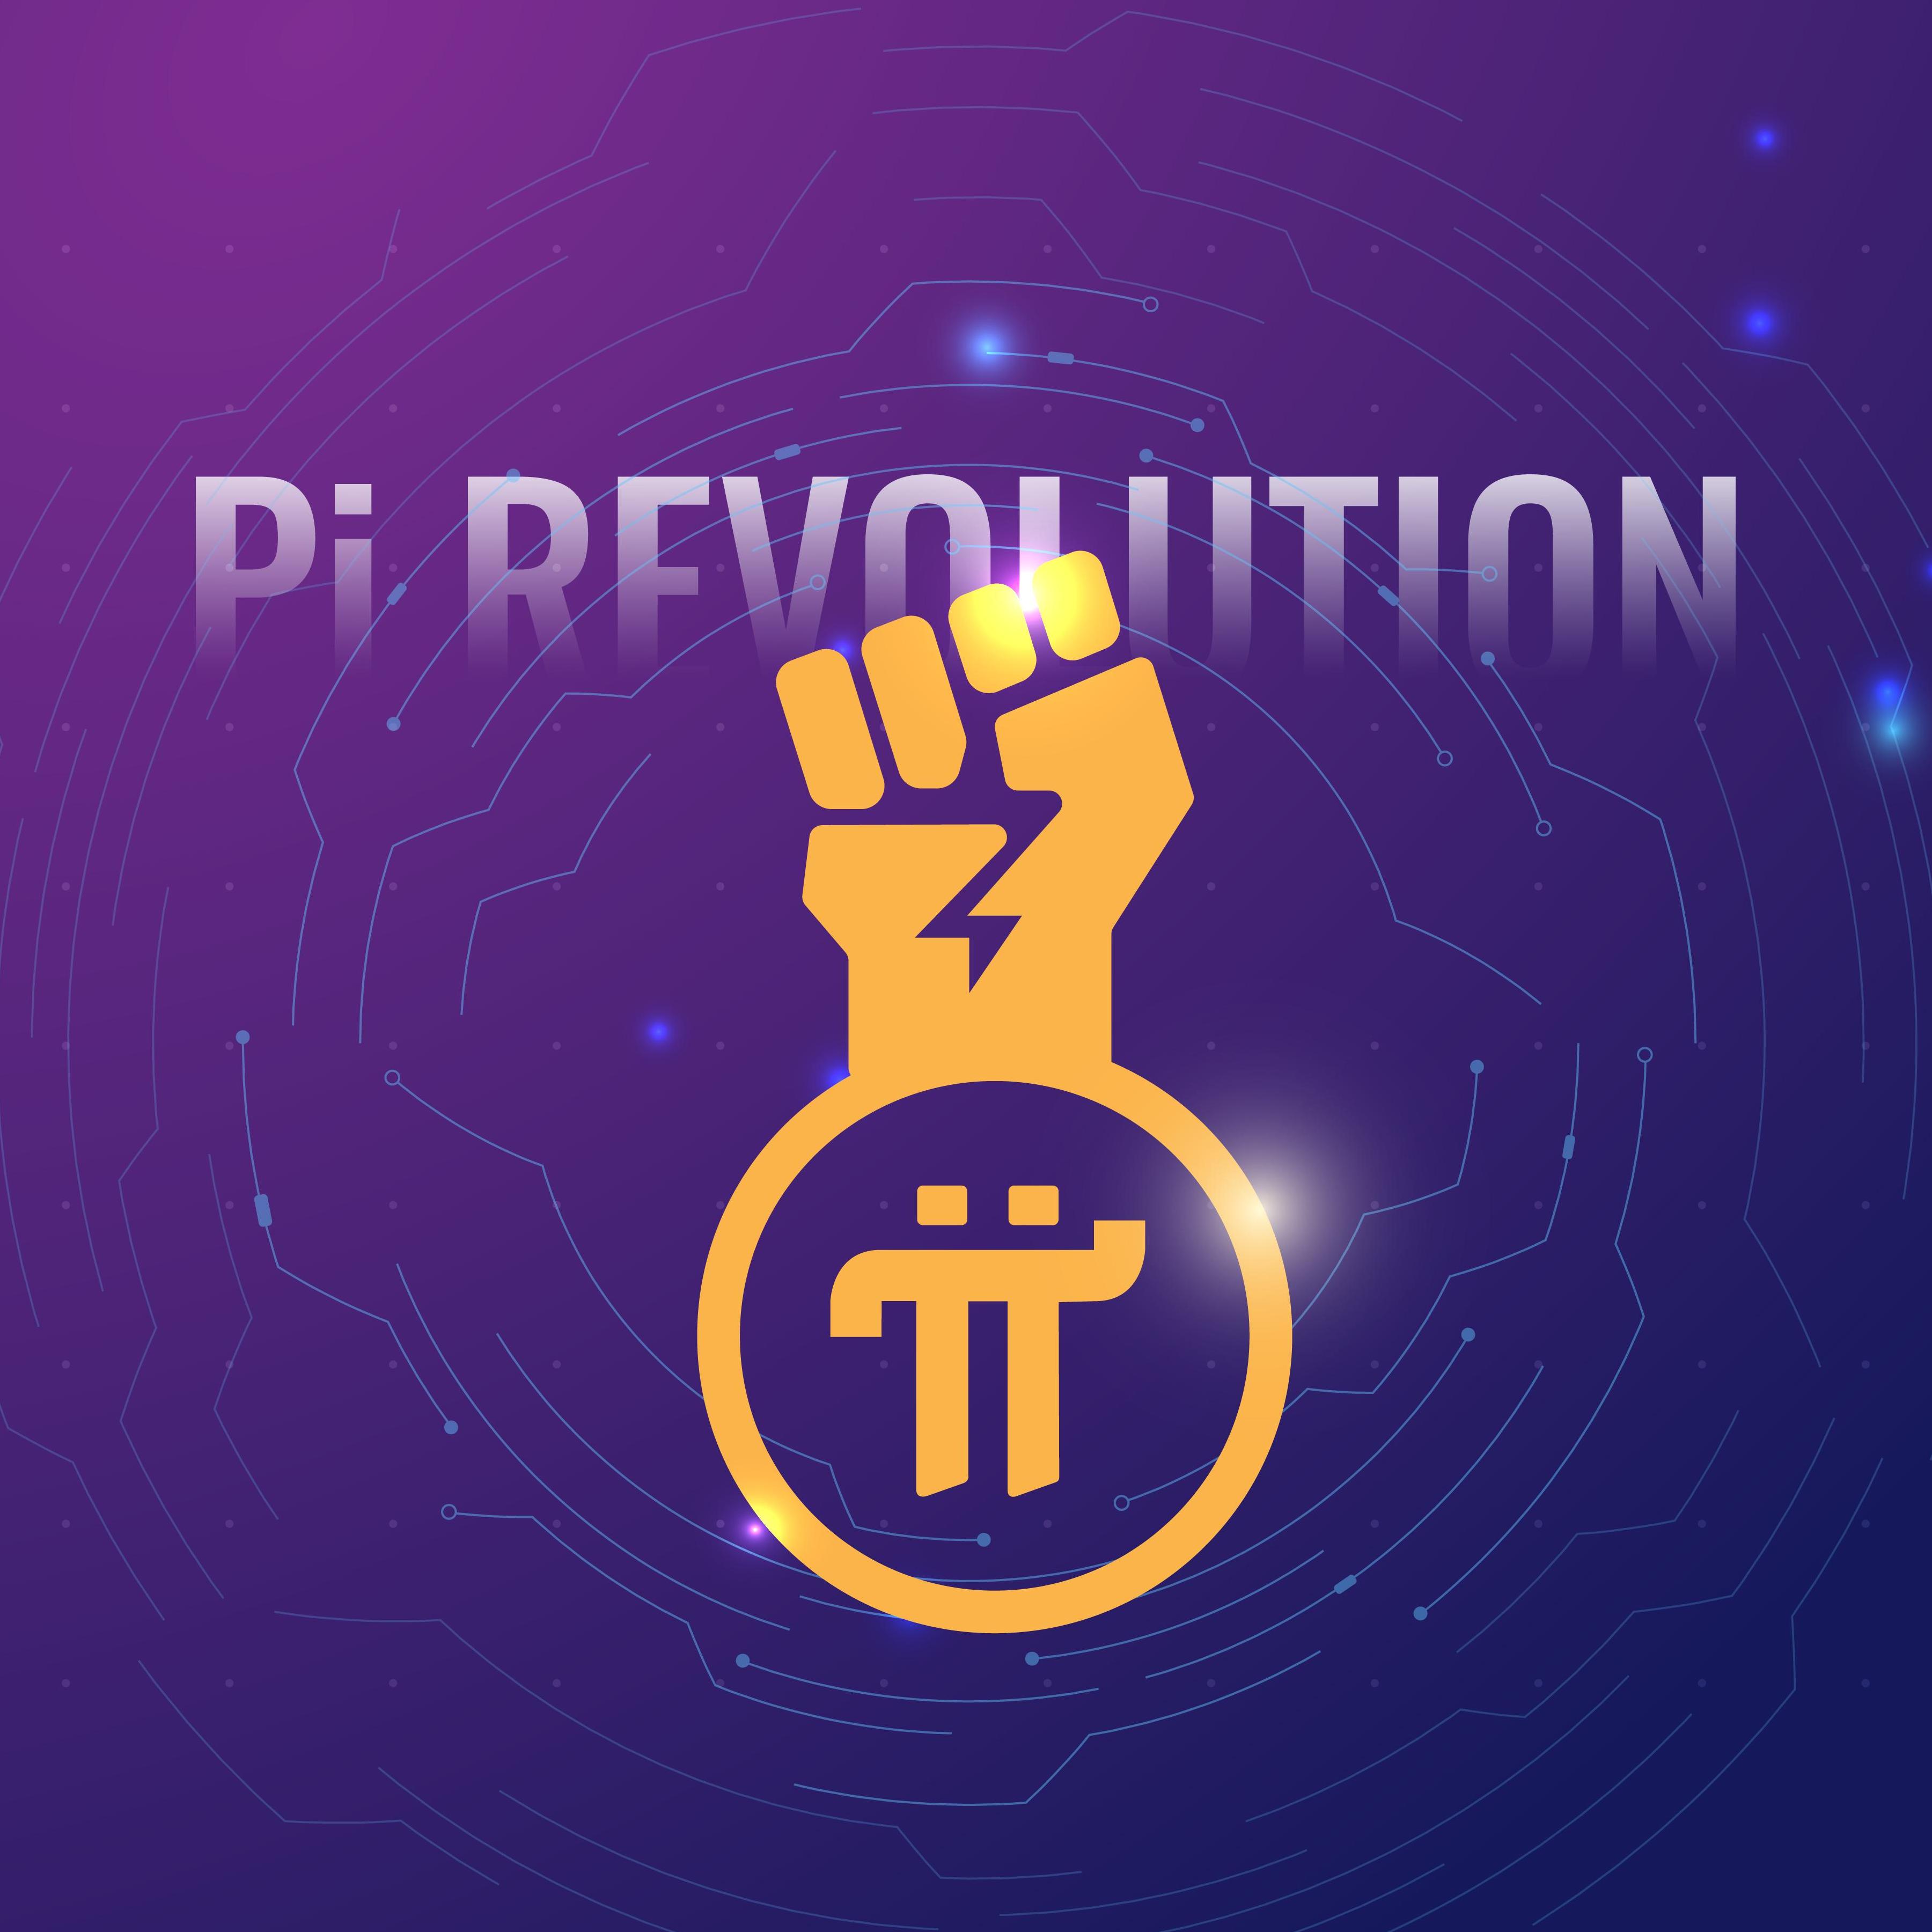 Pi Revolution